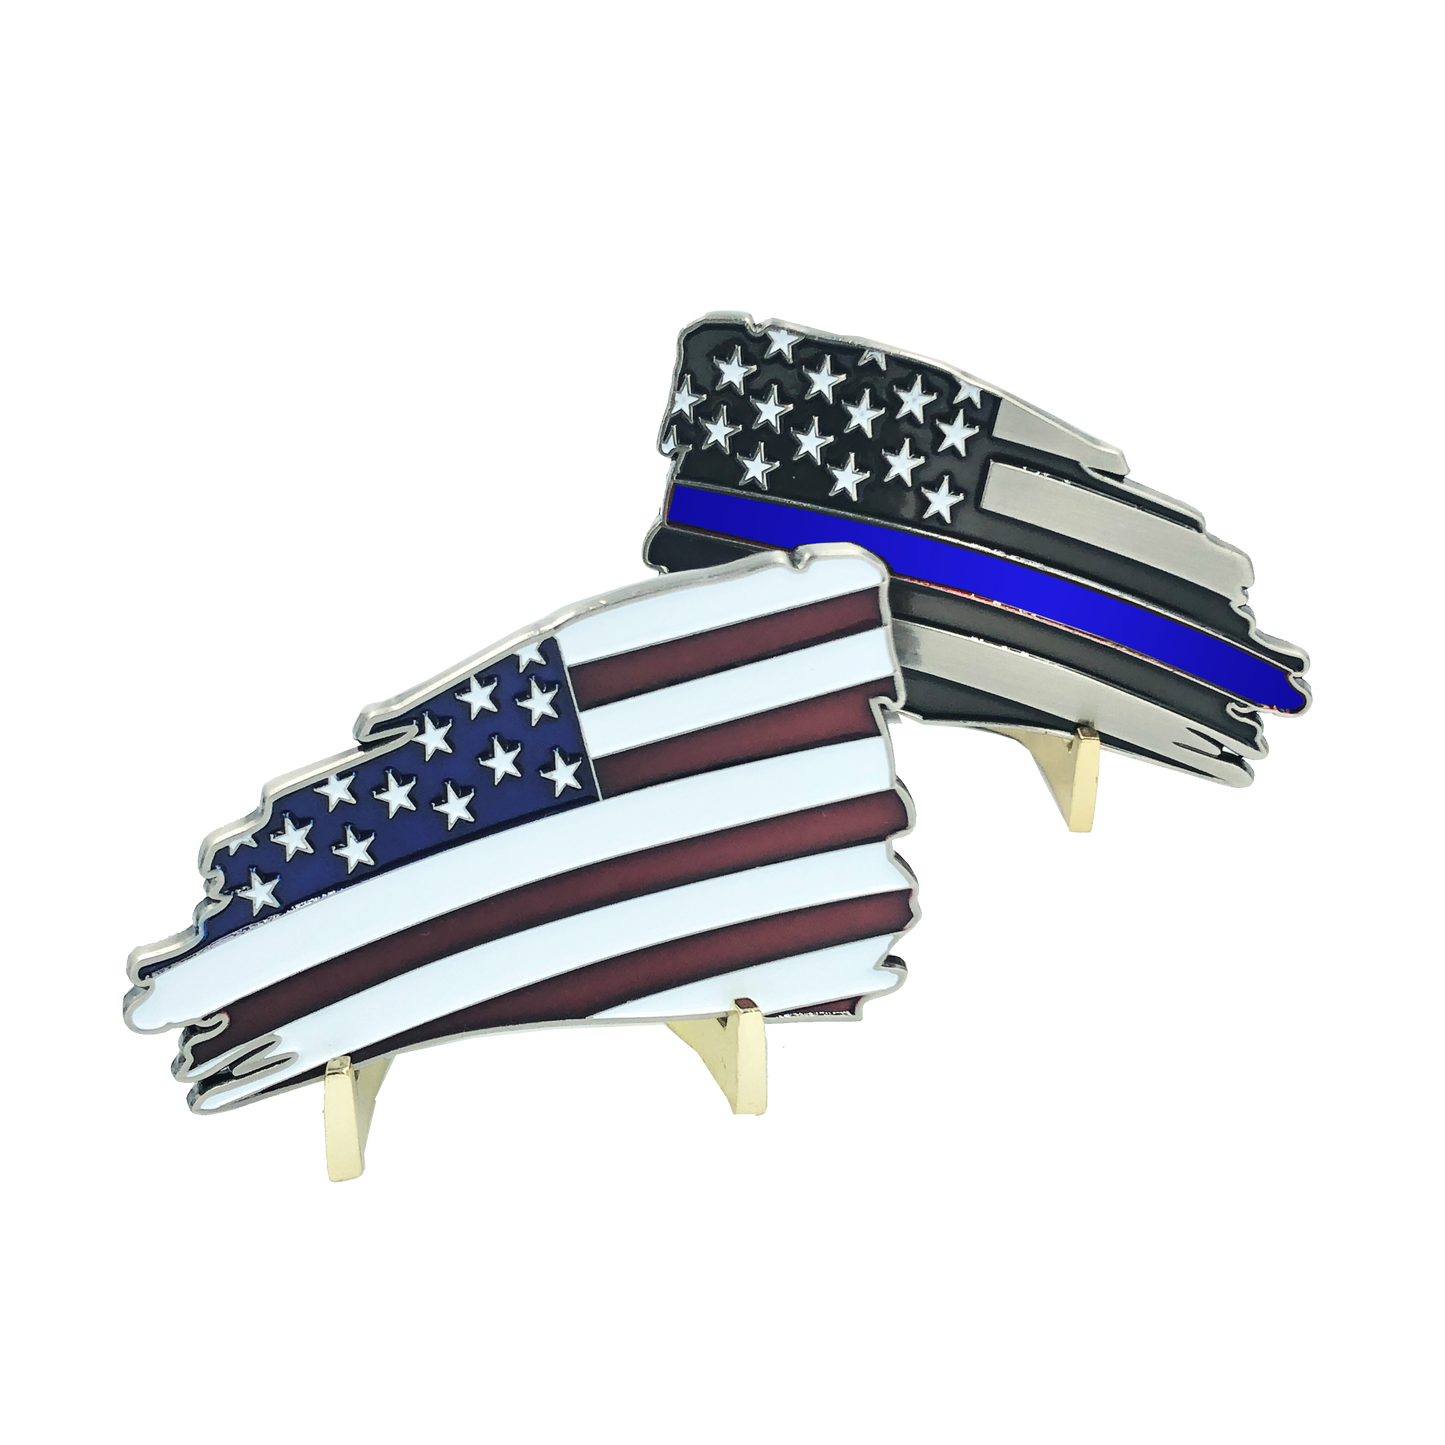 G-002 Thin Blue Line Old Glory American Flag Challenge Coin Police FBI CBP Secret Service ATF FAM